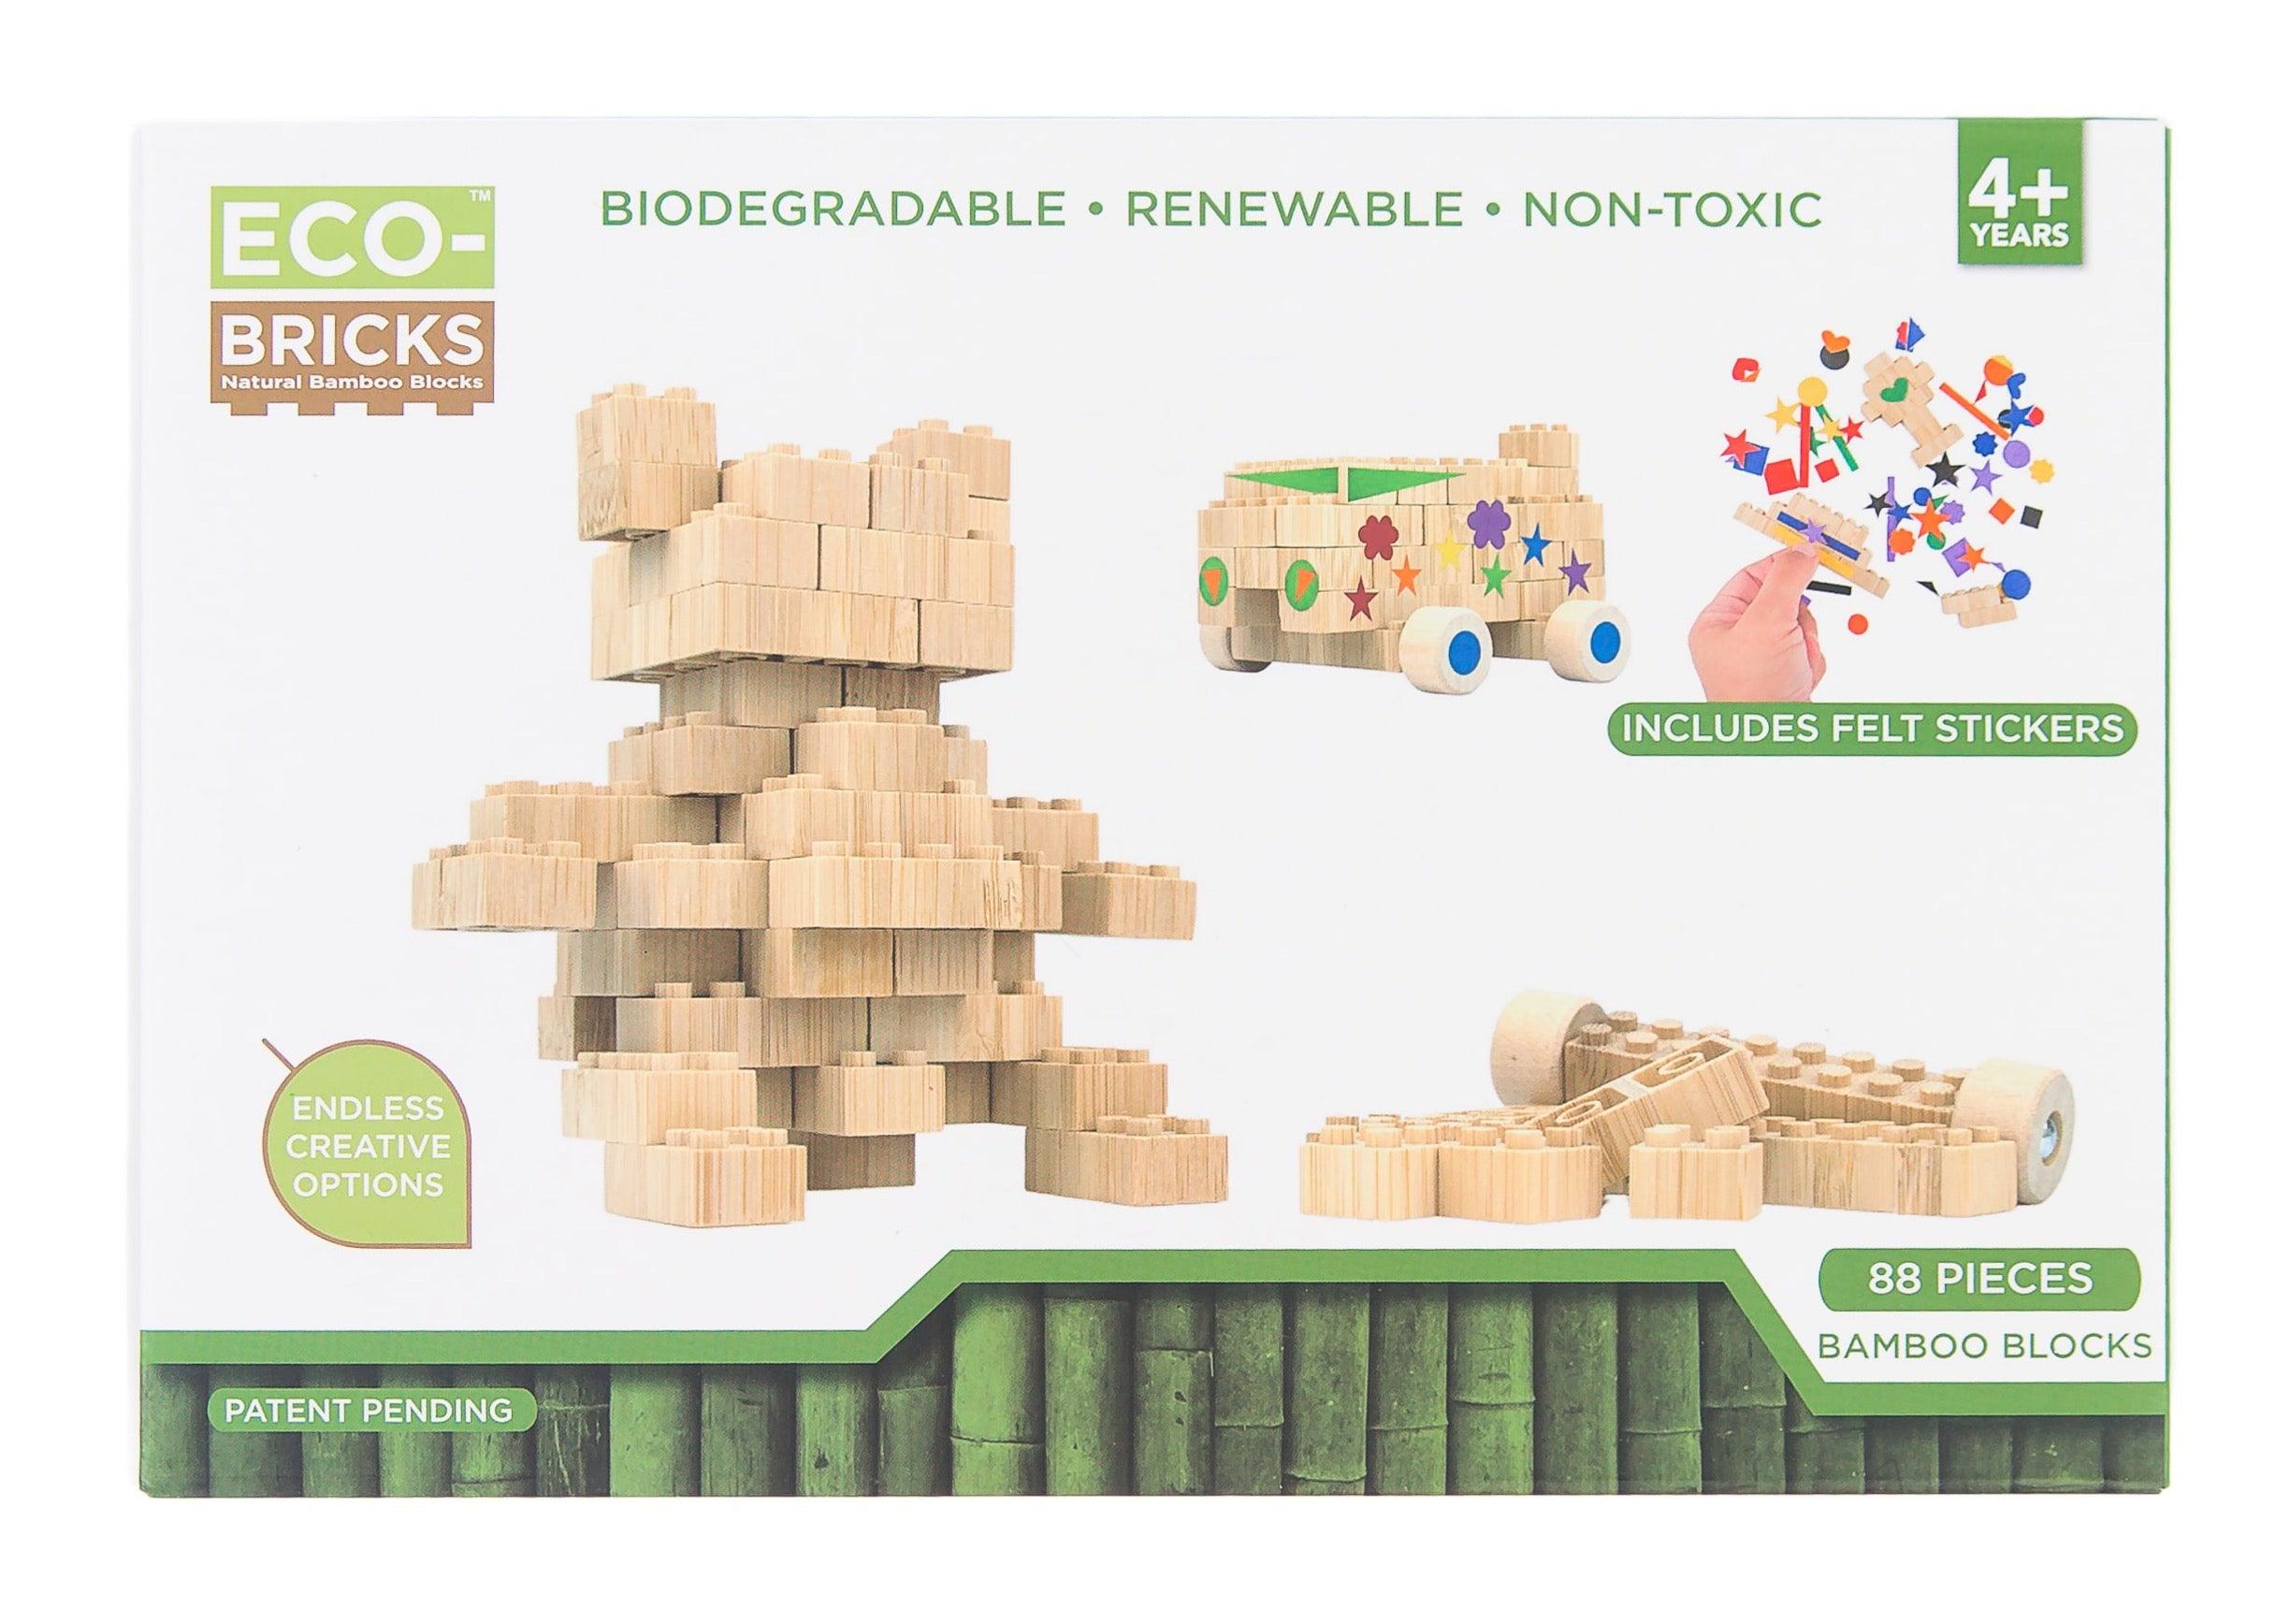 Once Kids Eco-bricks Bamboo 90pc